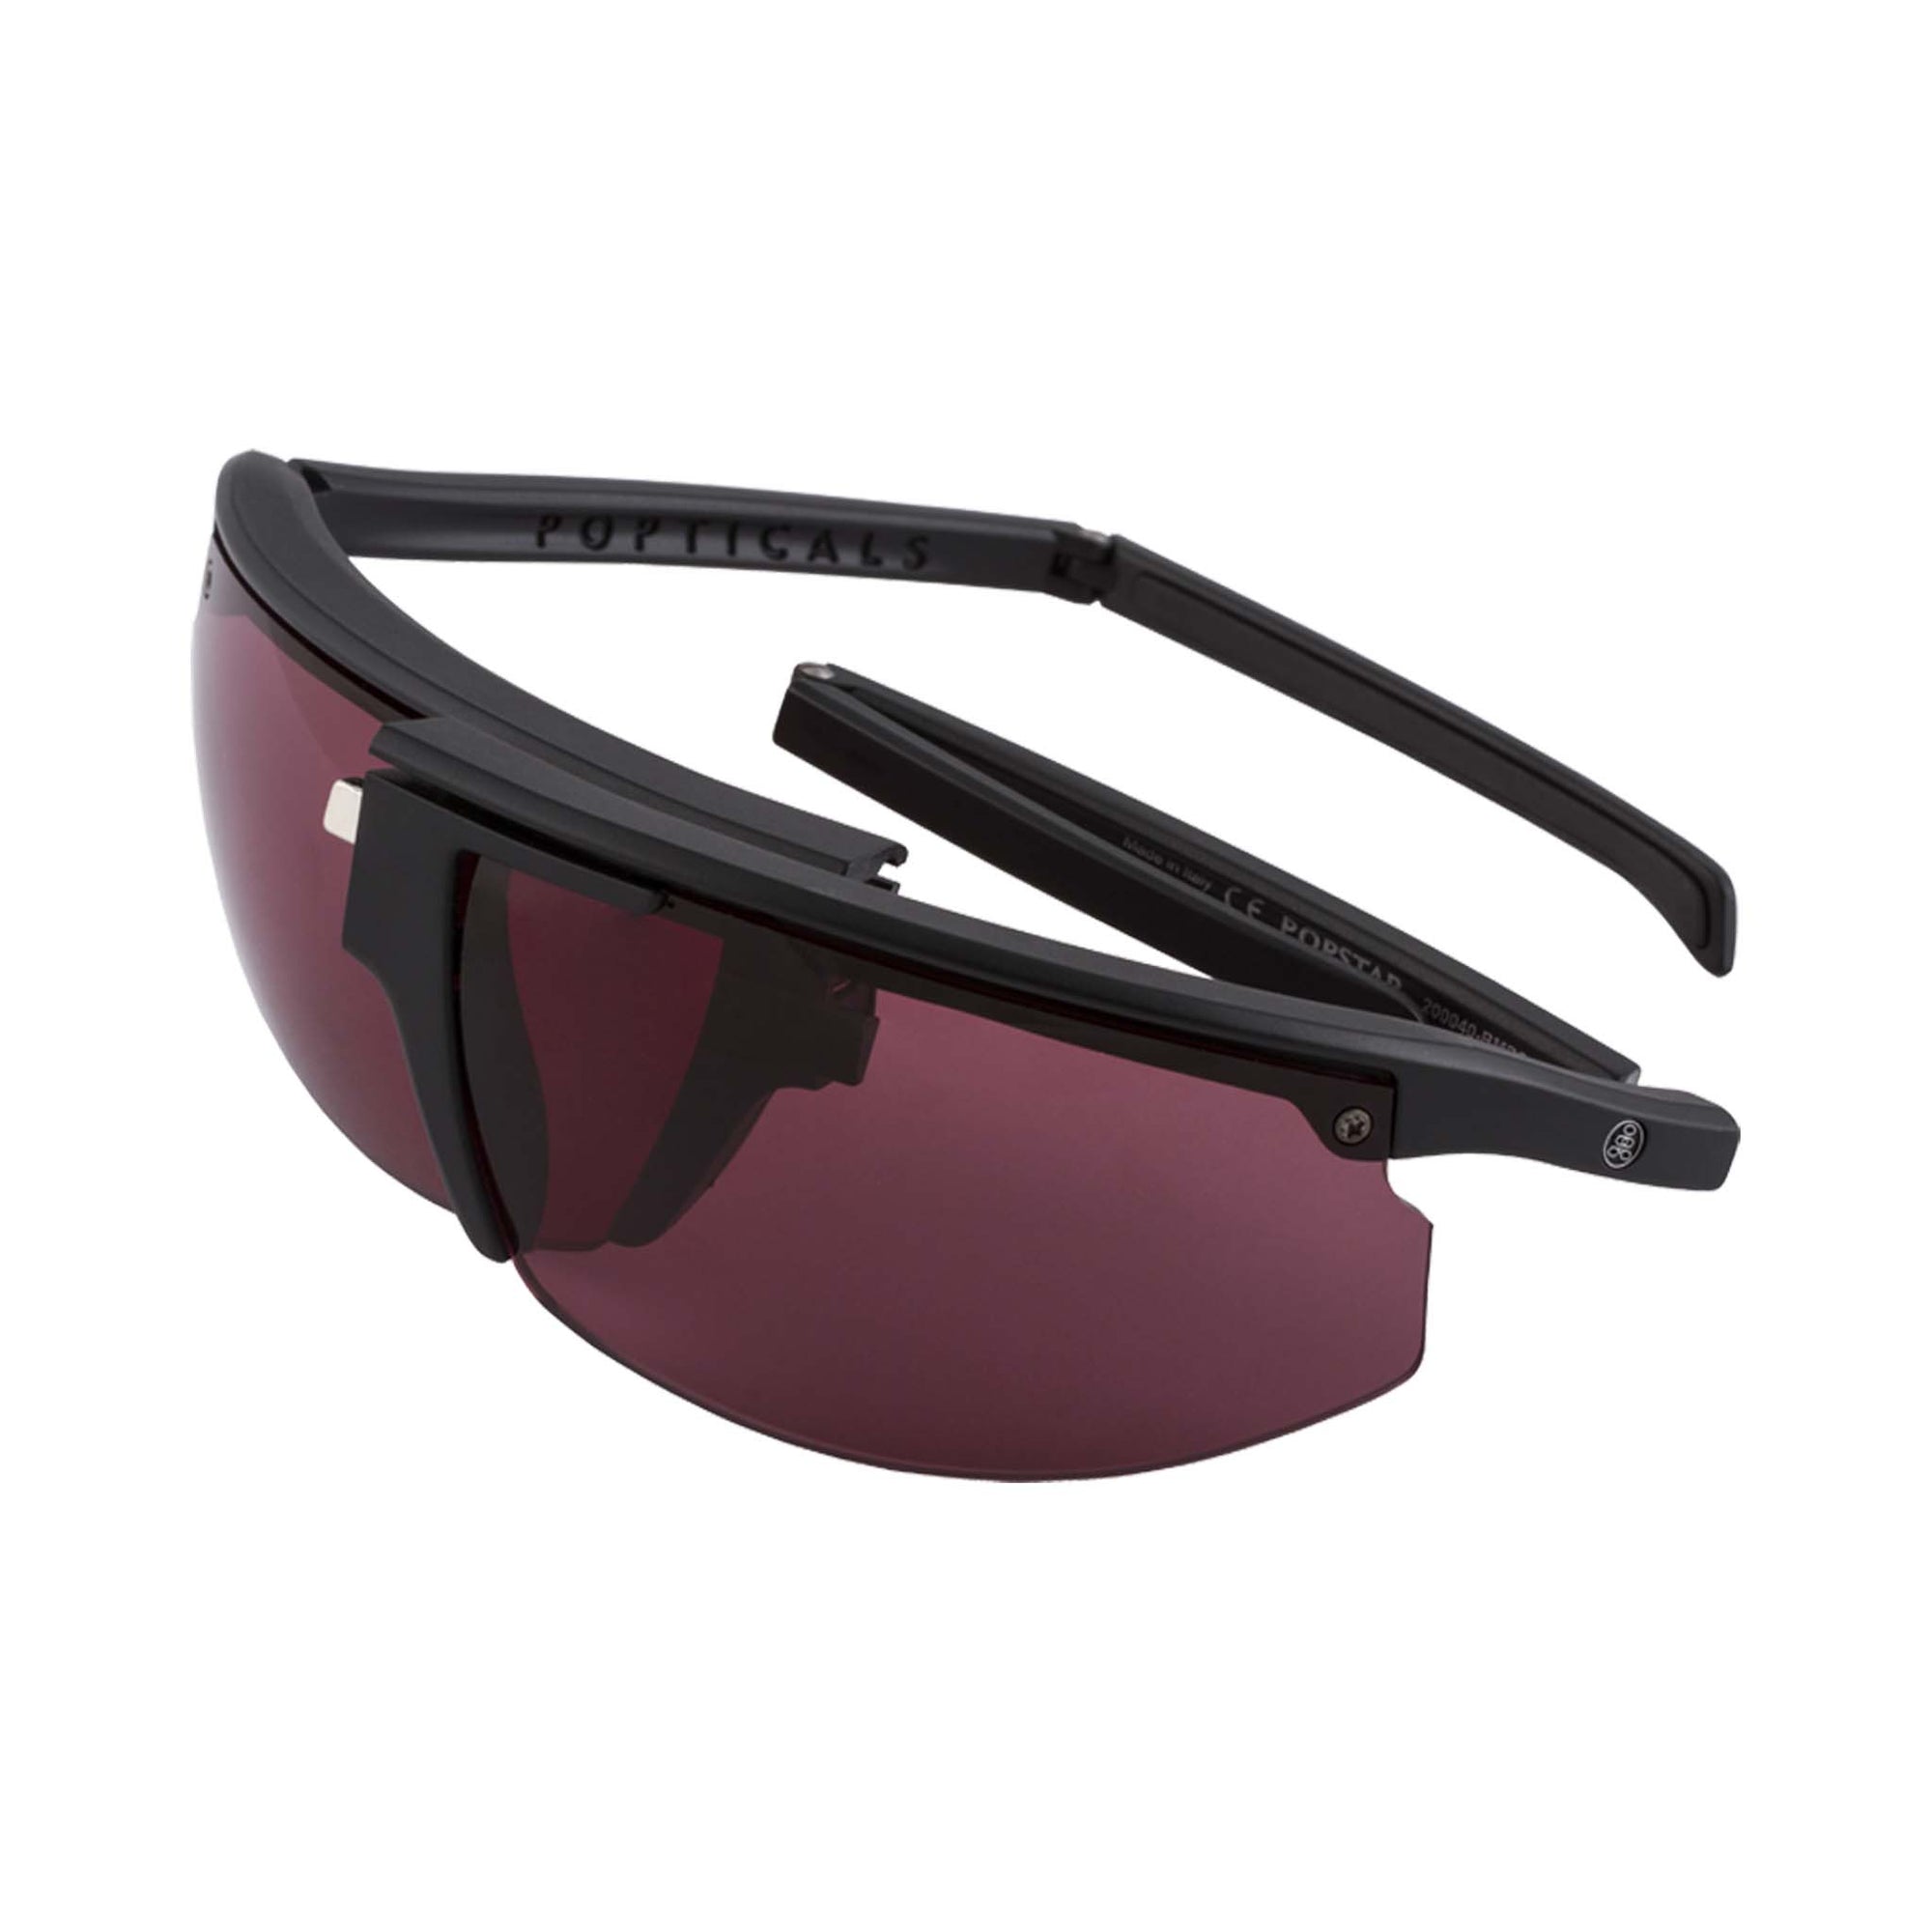 Popticals, Premium Compact Sunglasses, PopStar, 200040-BMPS, Standard Golf Sunglasses, Matte Black Frame, Purple Golf Lenses, Glam View